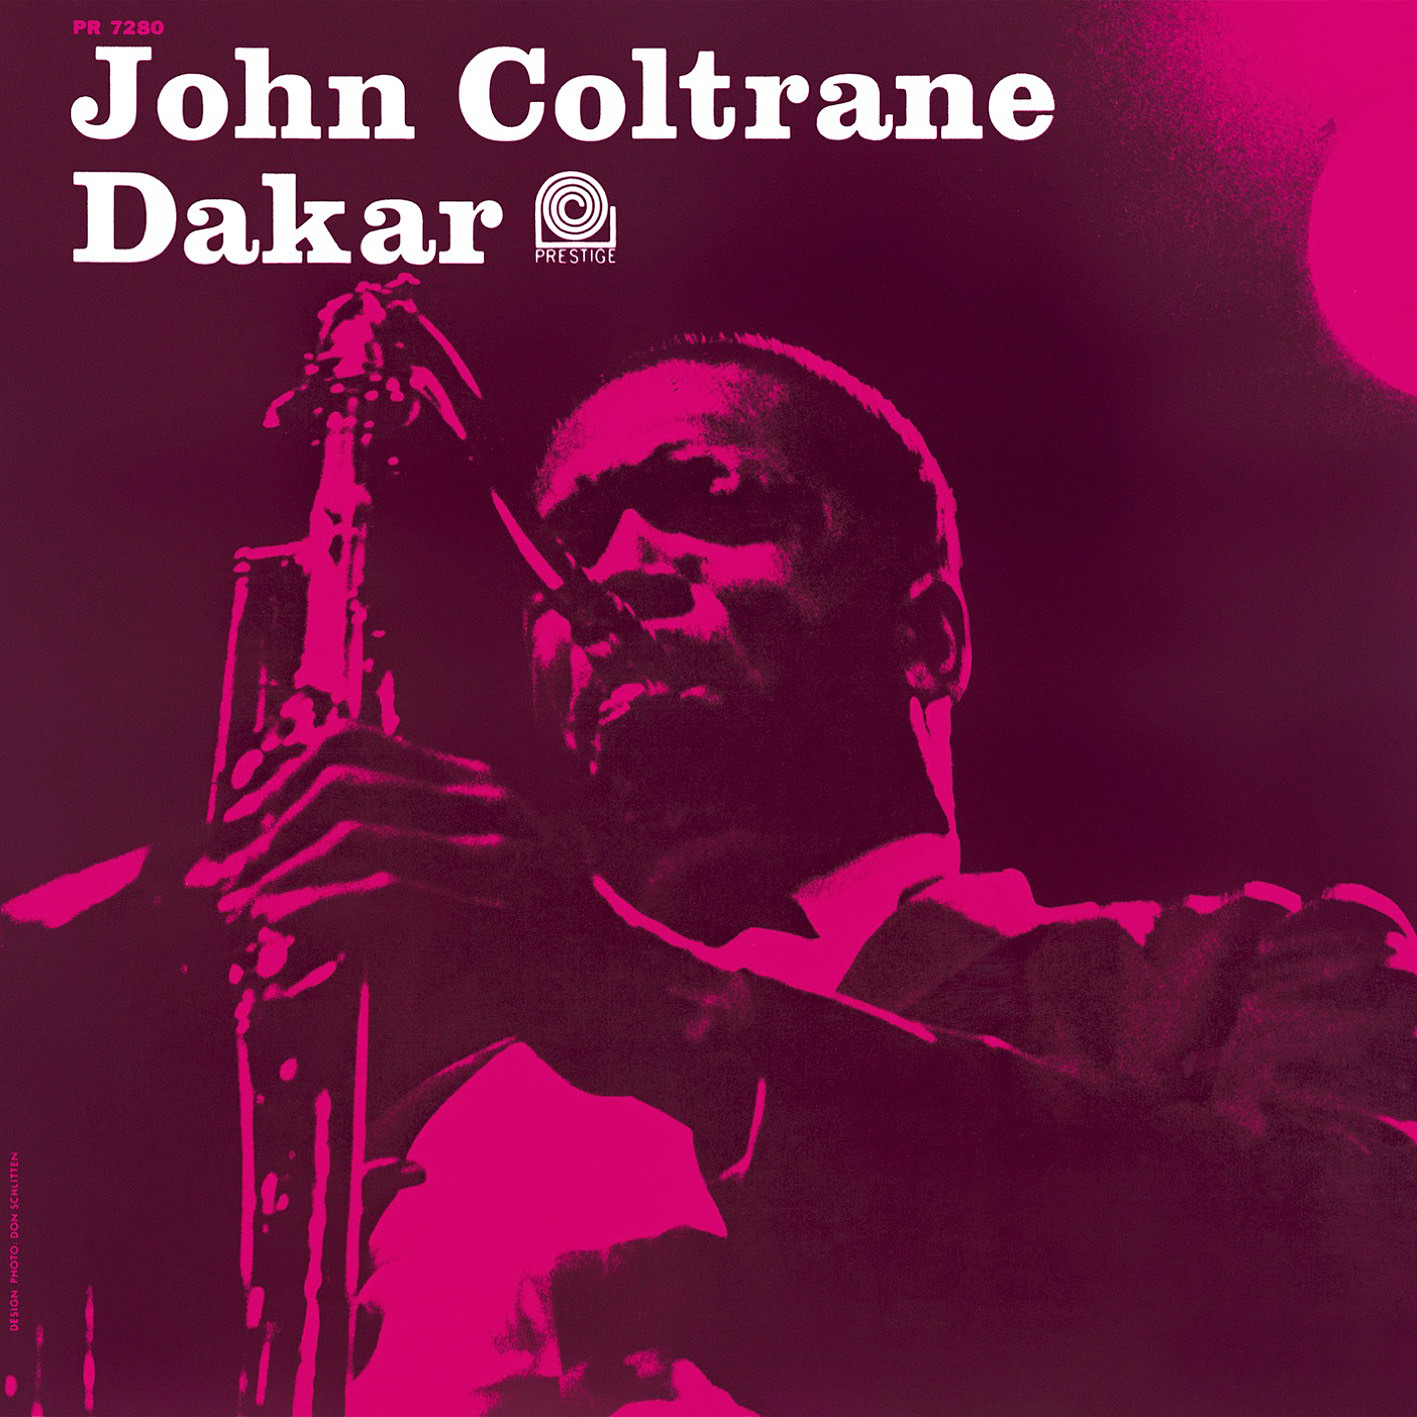 John Coltrane - Dakar (1963/2016) [HDTracks FLAC 24bit/192kHz]